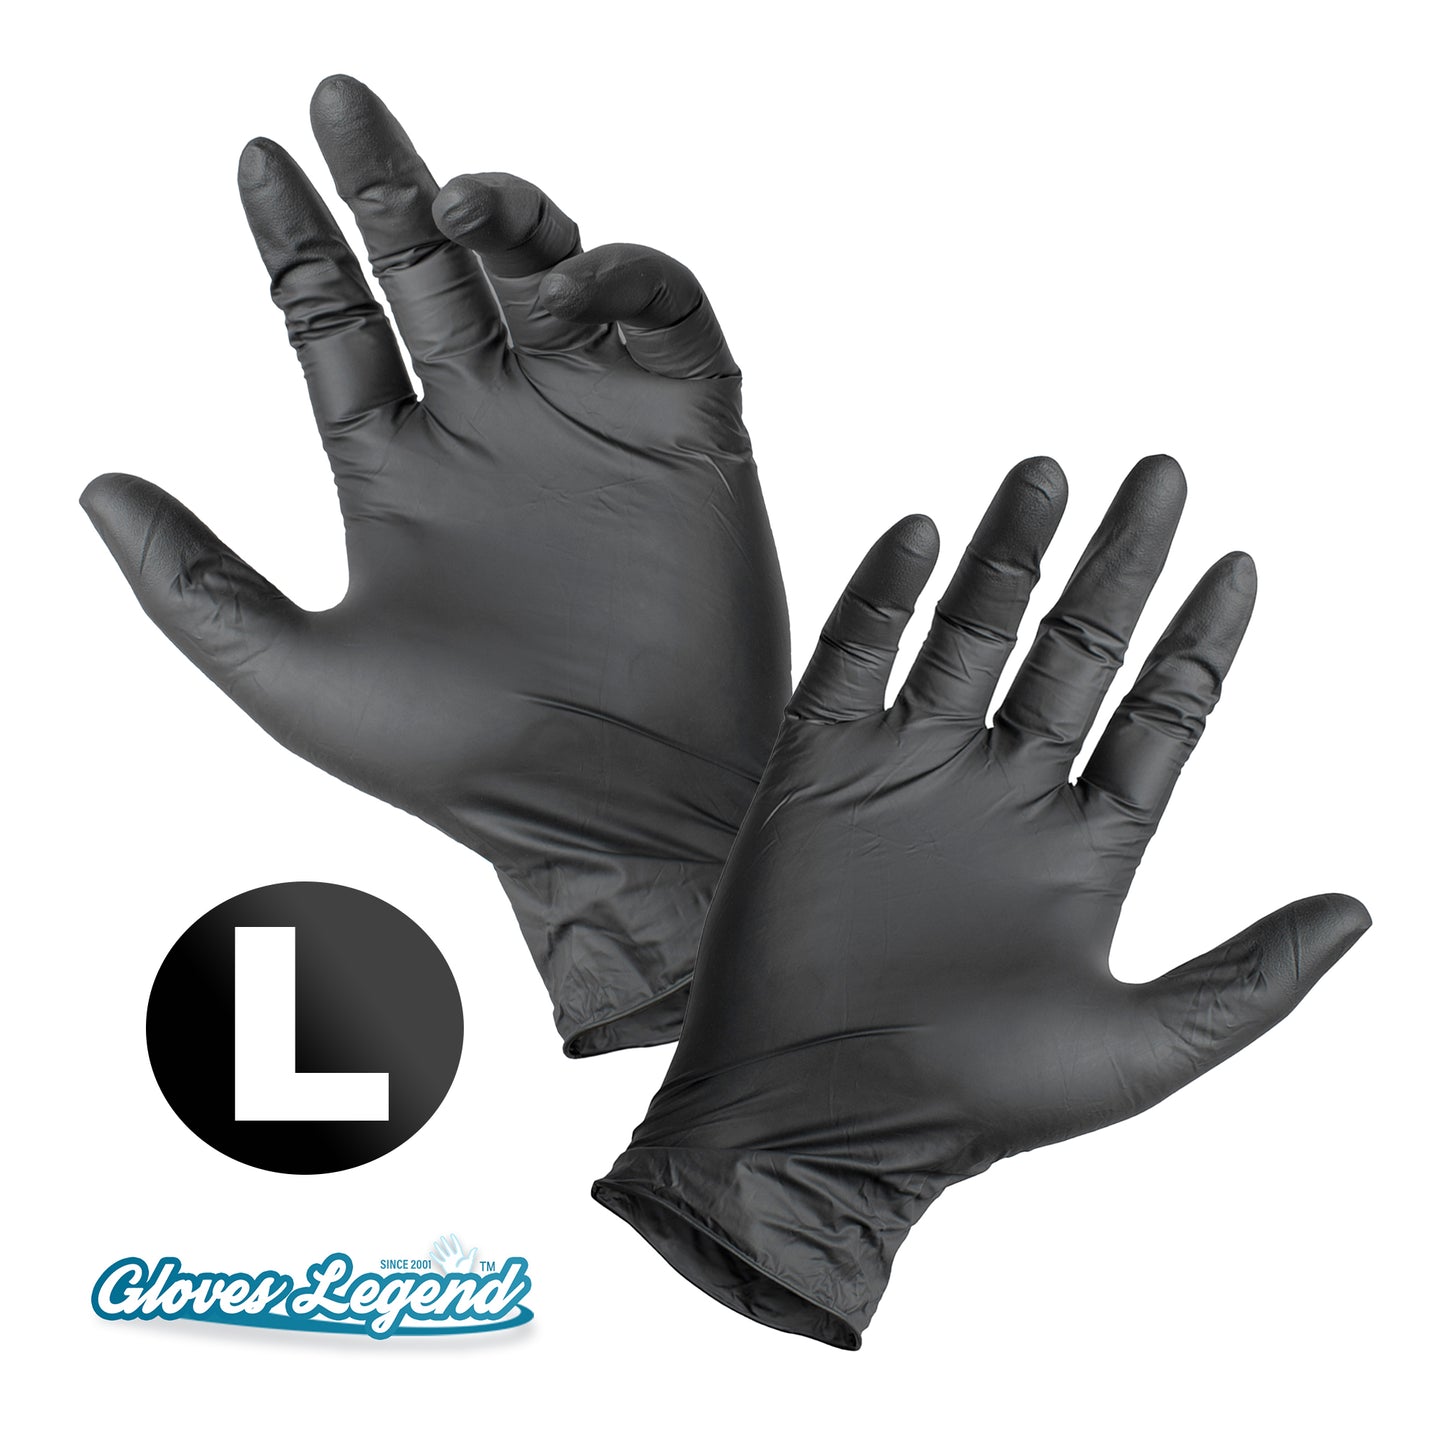 One Box (100 Gloves) Size Large -  Black Latex Powder Free Medical Exam Tattoos Piercing Gloves